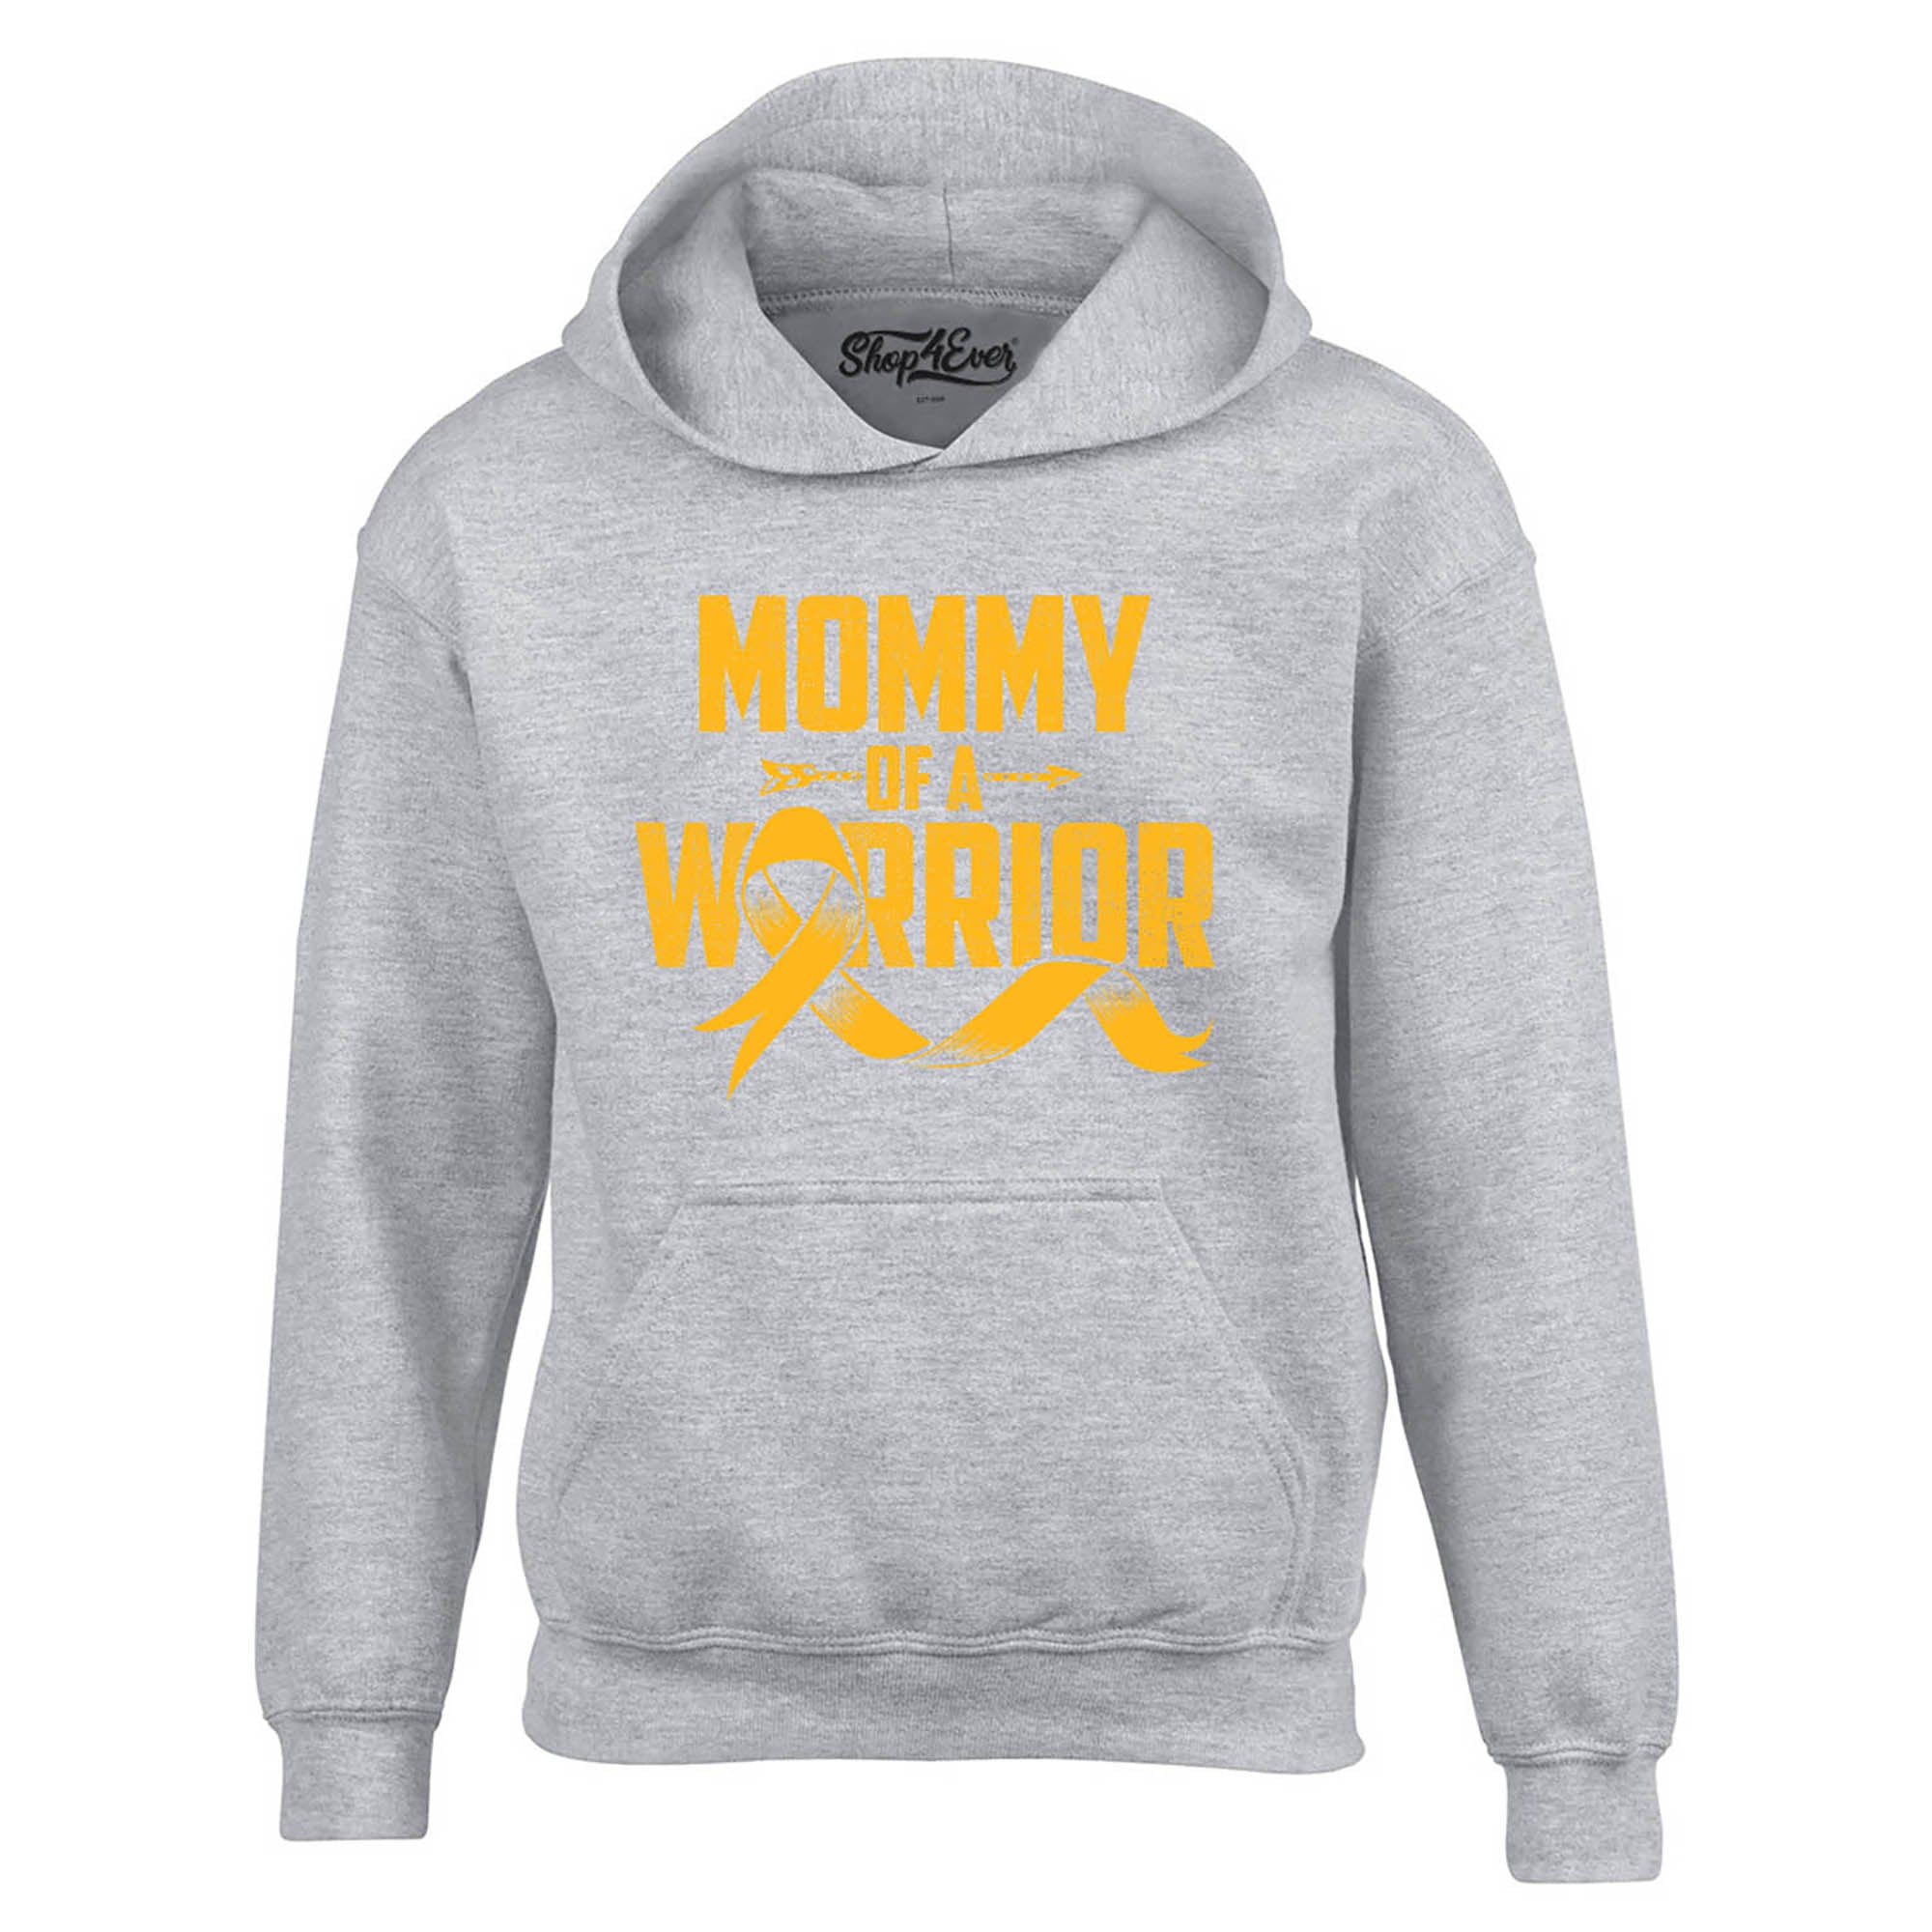 Mommy of a Warrior Childhood Cancer Awareness Hoodie Sweatshirts